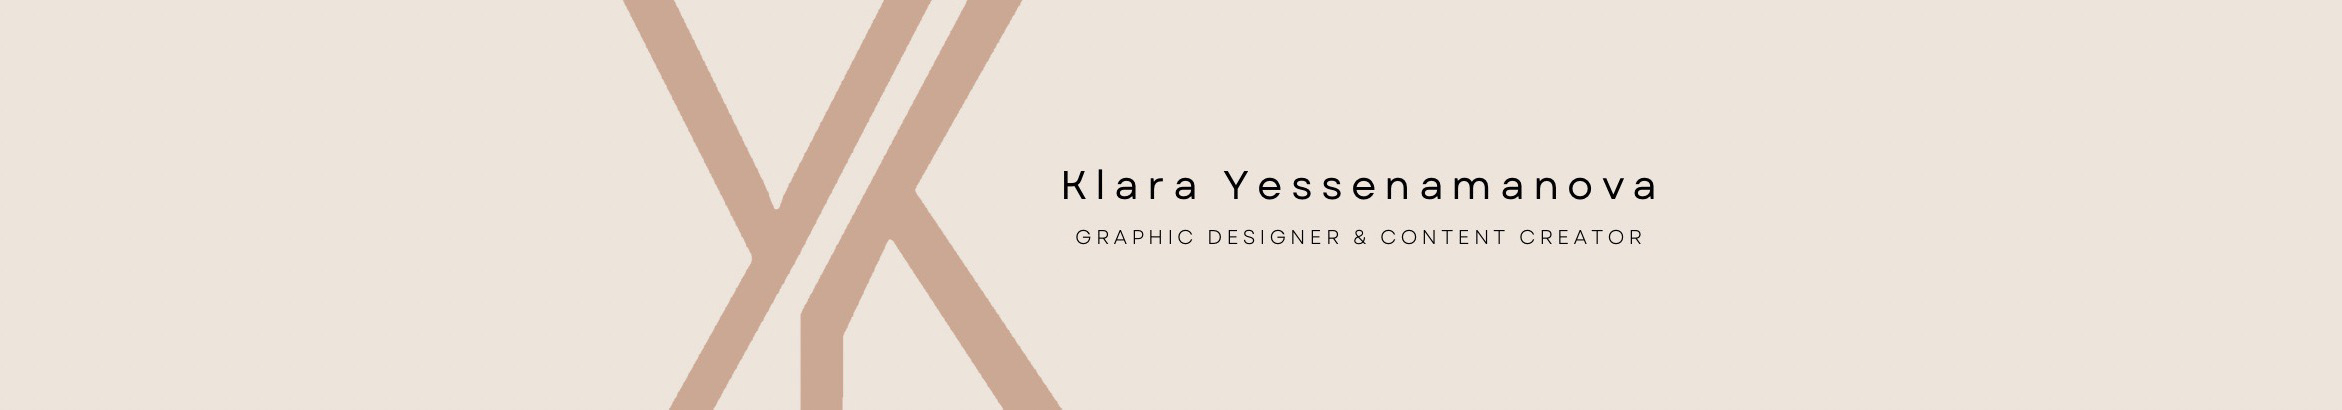 Banner de perfil de Klara Yessenamanova